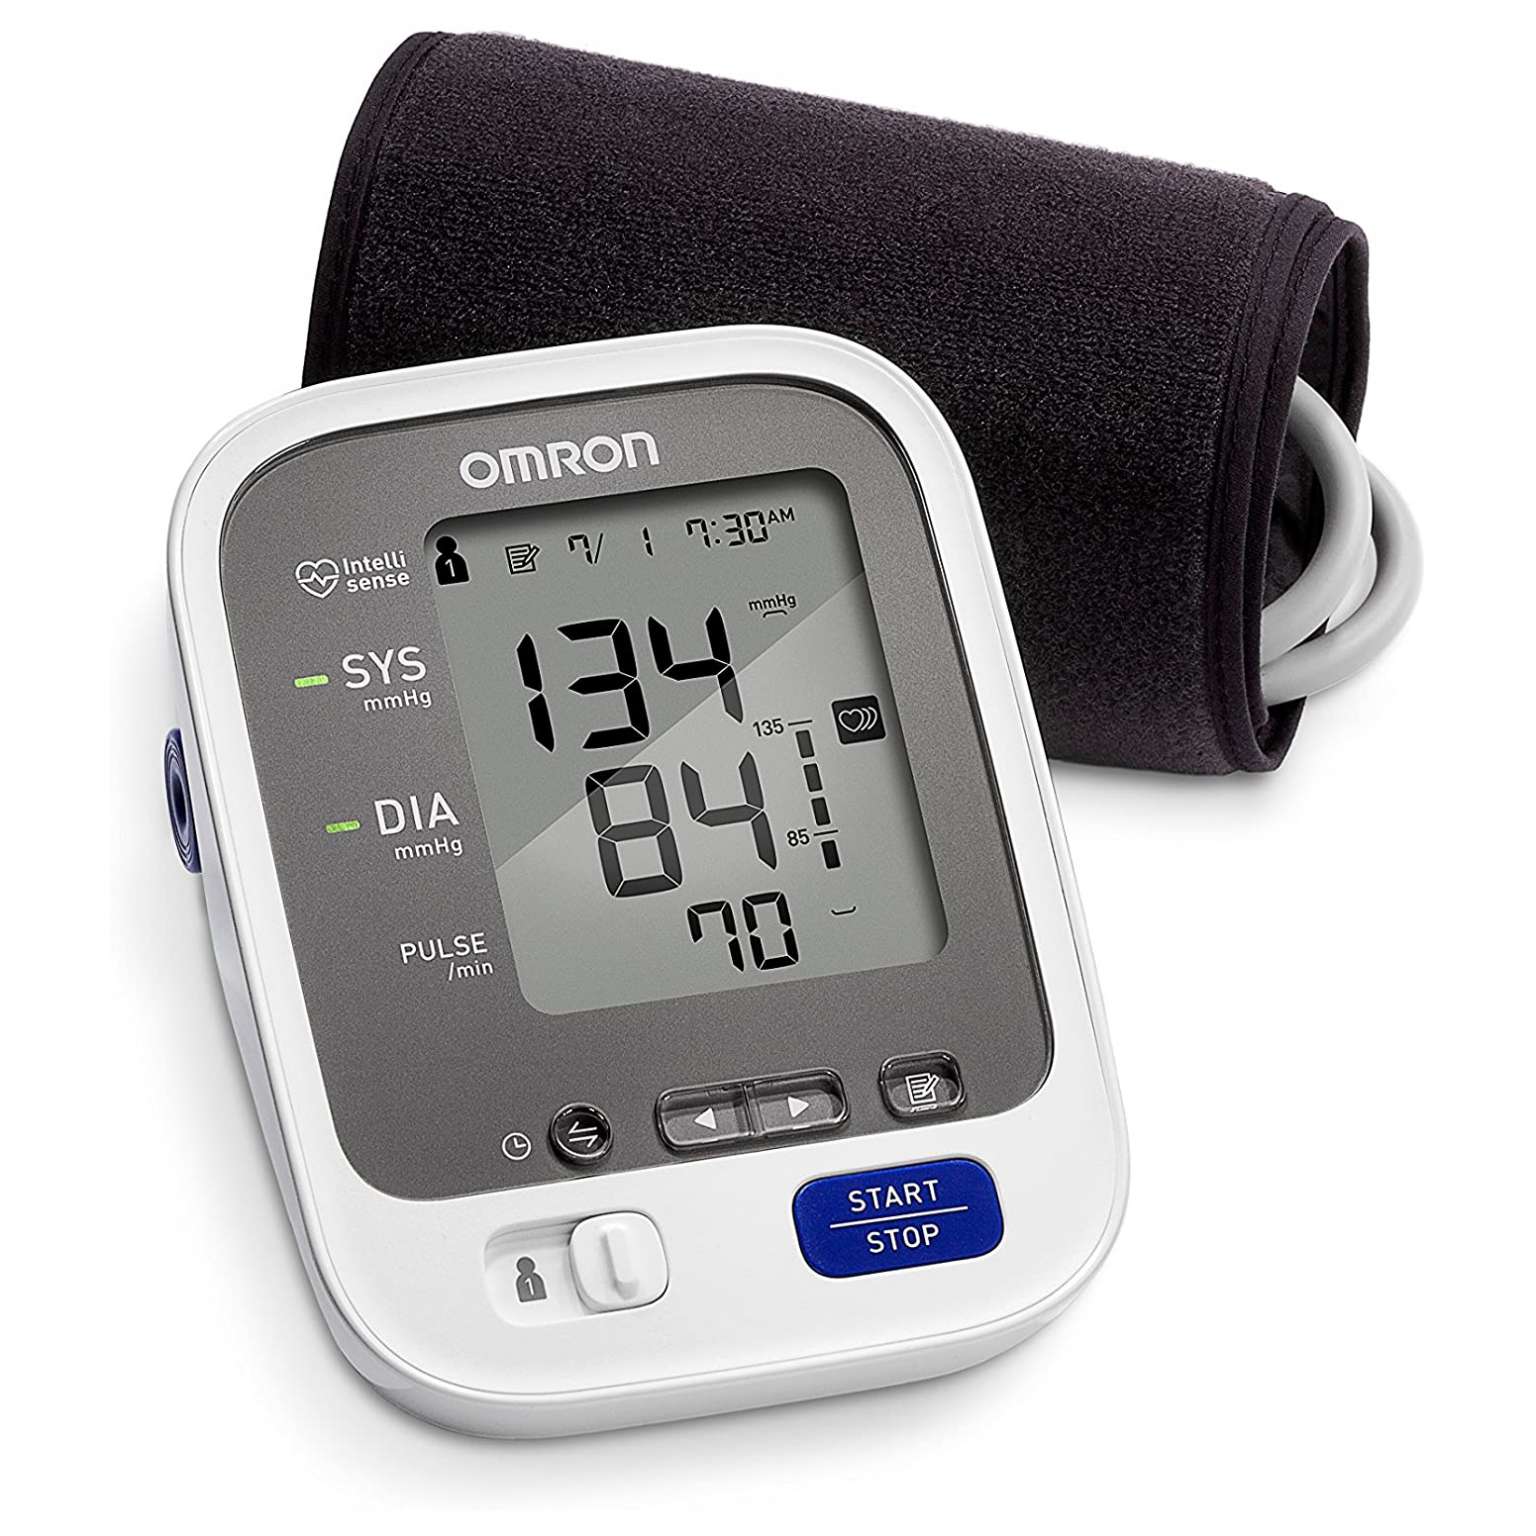 Top 10 Best Omron Blood Pressure Monitors in 2021 Reviews